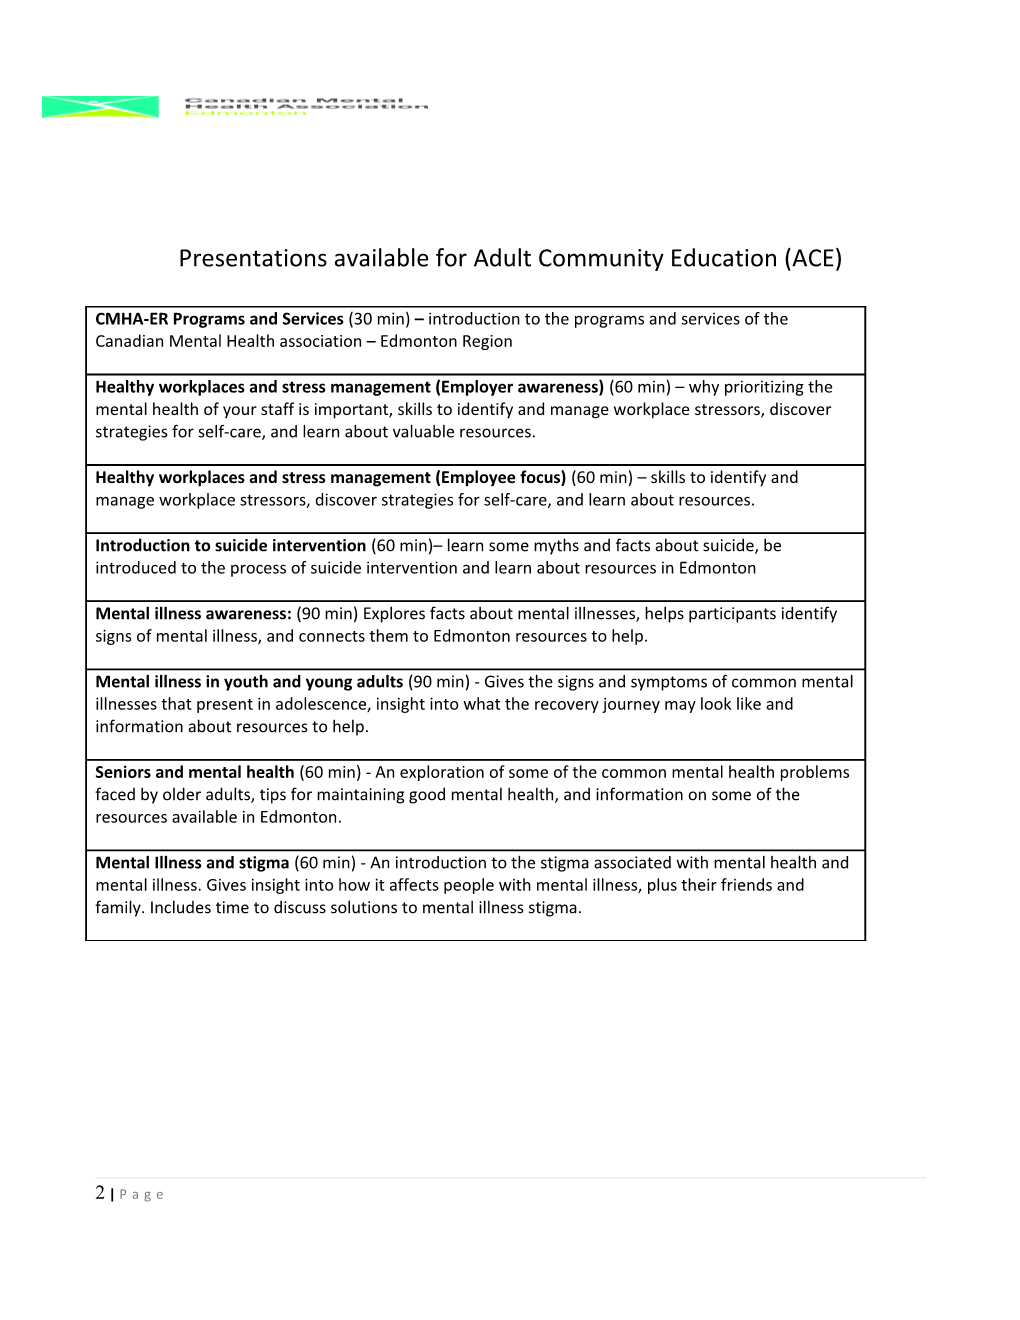 Adult Community Education (ACE) Program